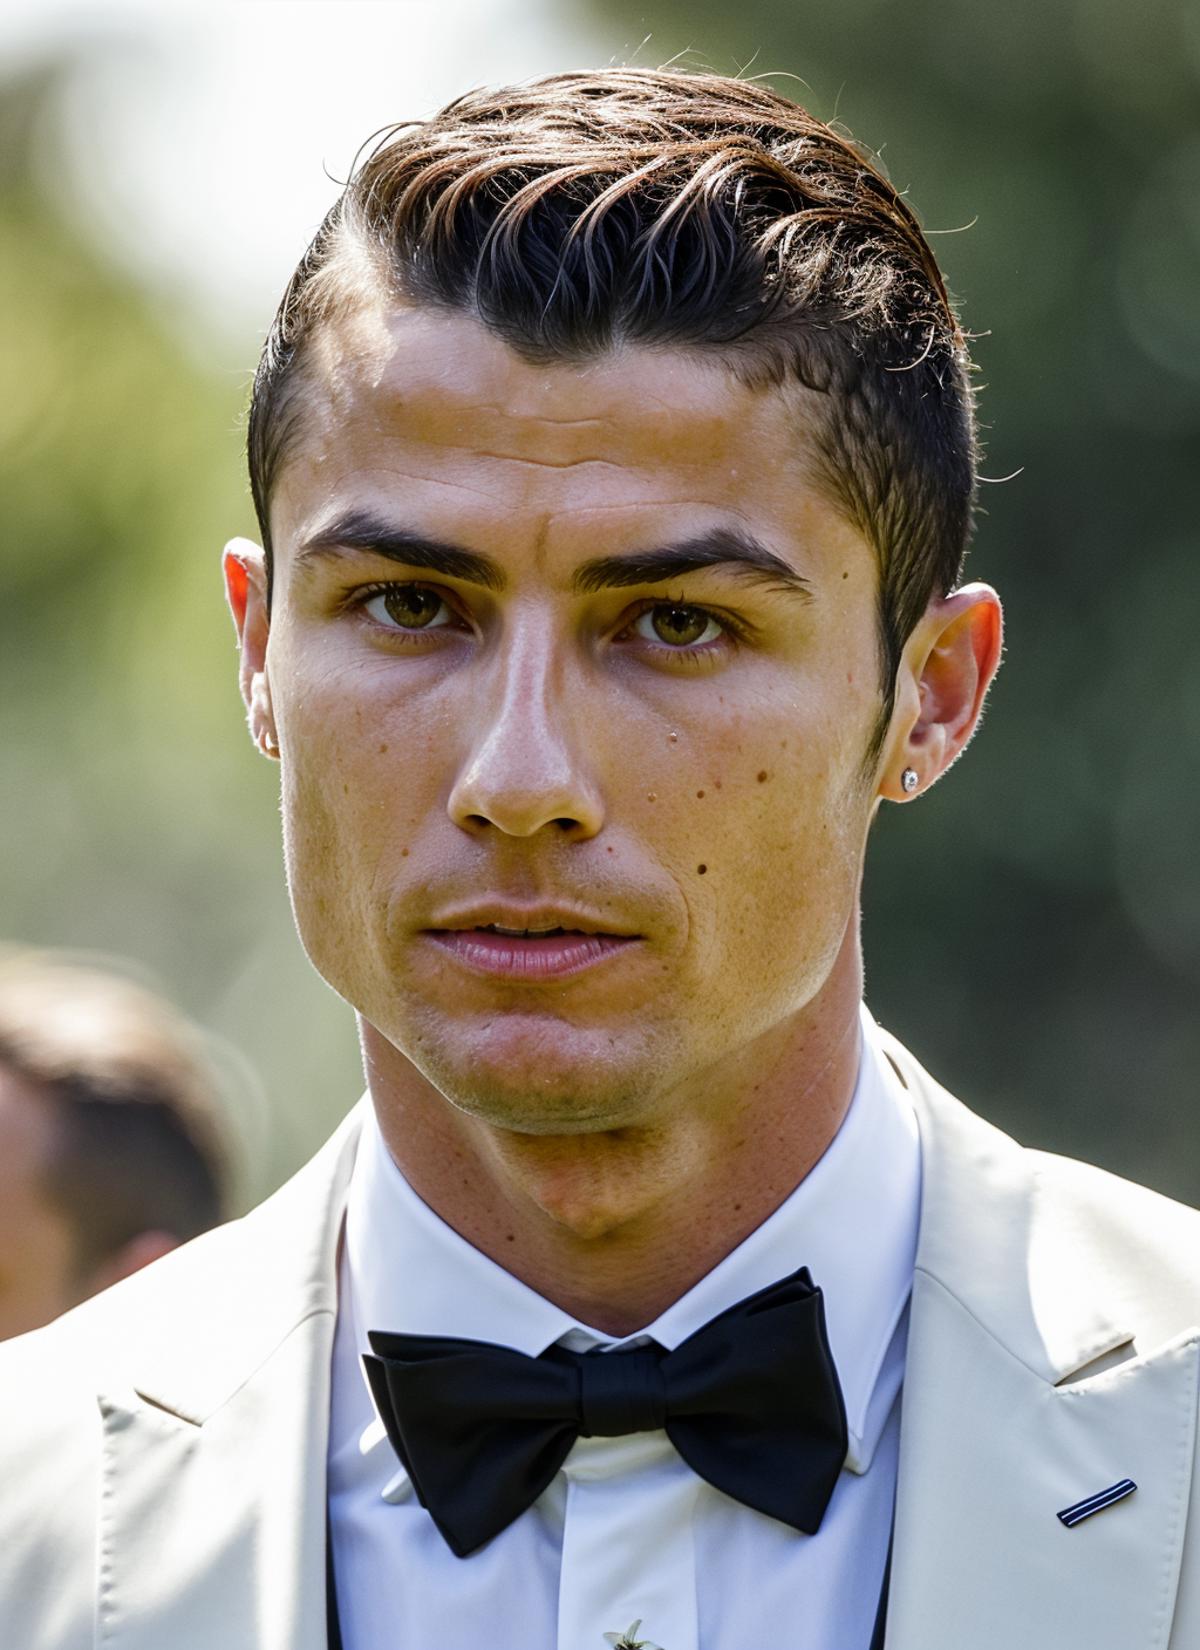 Cristiano Ronaldo image by malcolmrey